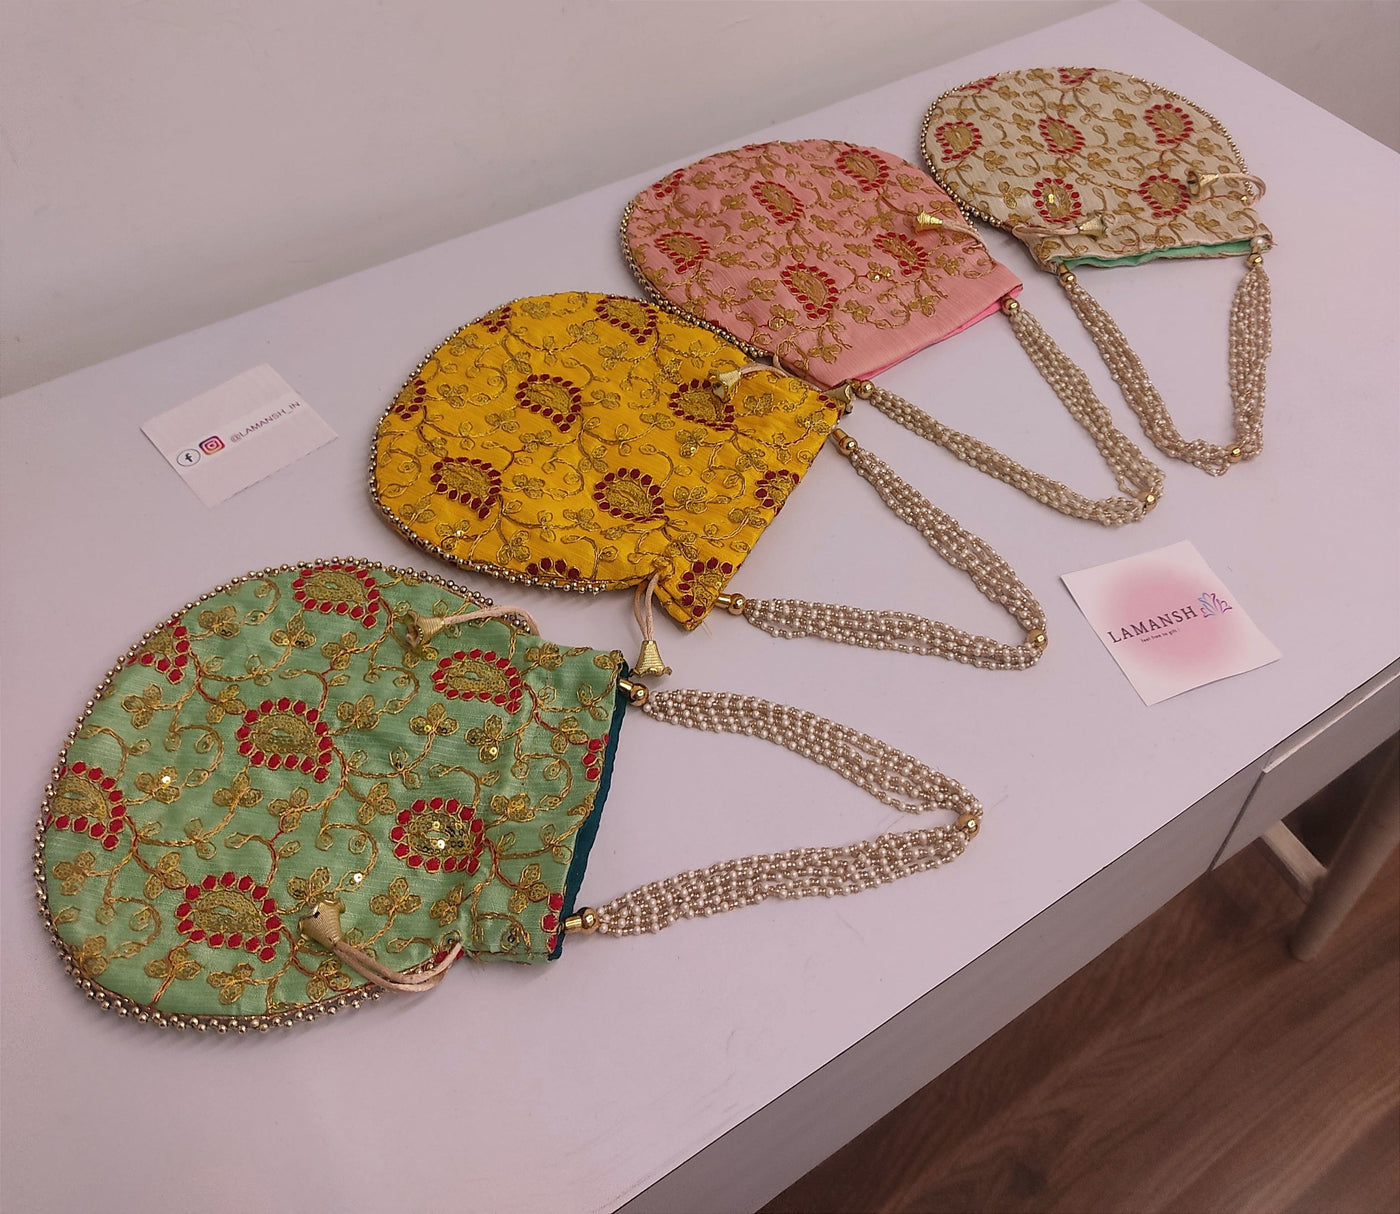 100 Rs each on buying 🏷in bulk | Call 📞 at 8619550223 Women's Potli Bag LAMANSH® Embroidered Potli Bags for Return Gifting 🎁 & Wedding Favors